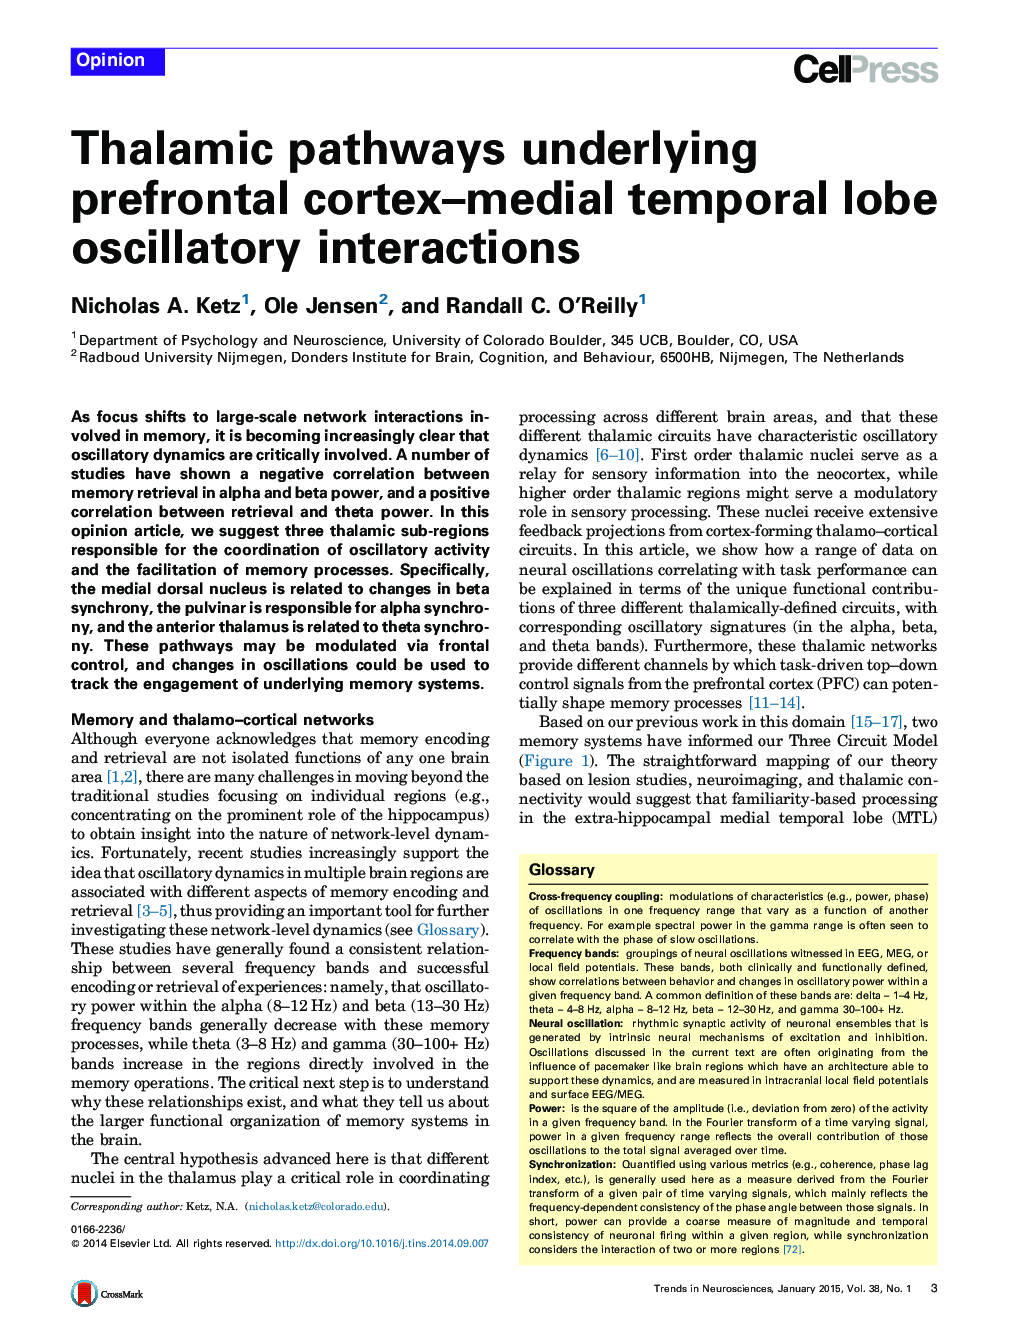 Thalamic pathways underlying prefrontal cortex–medial temporal lobe oscillatory interactions